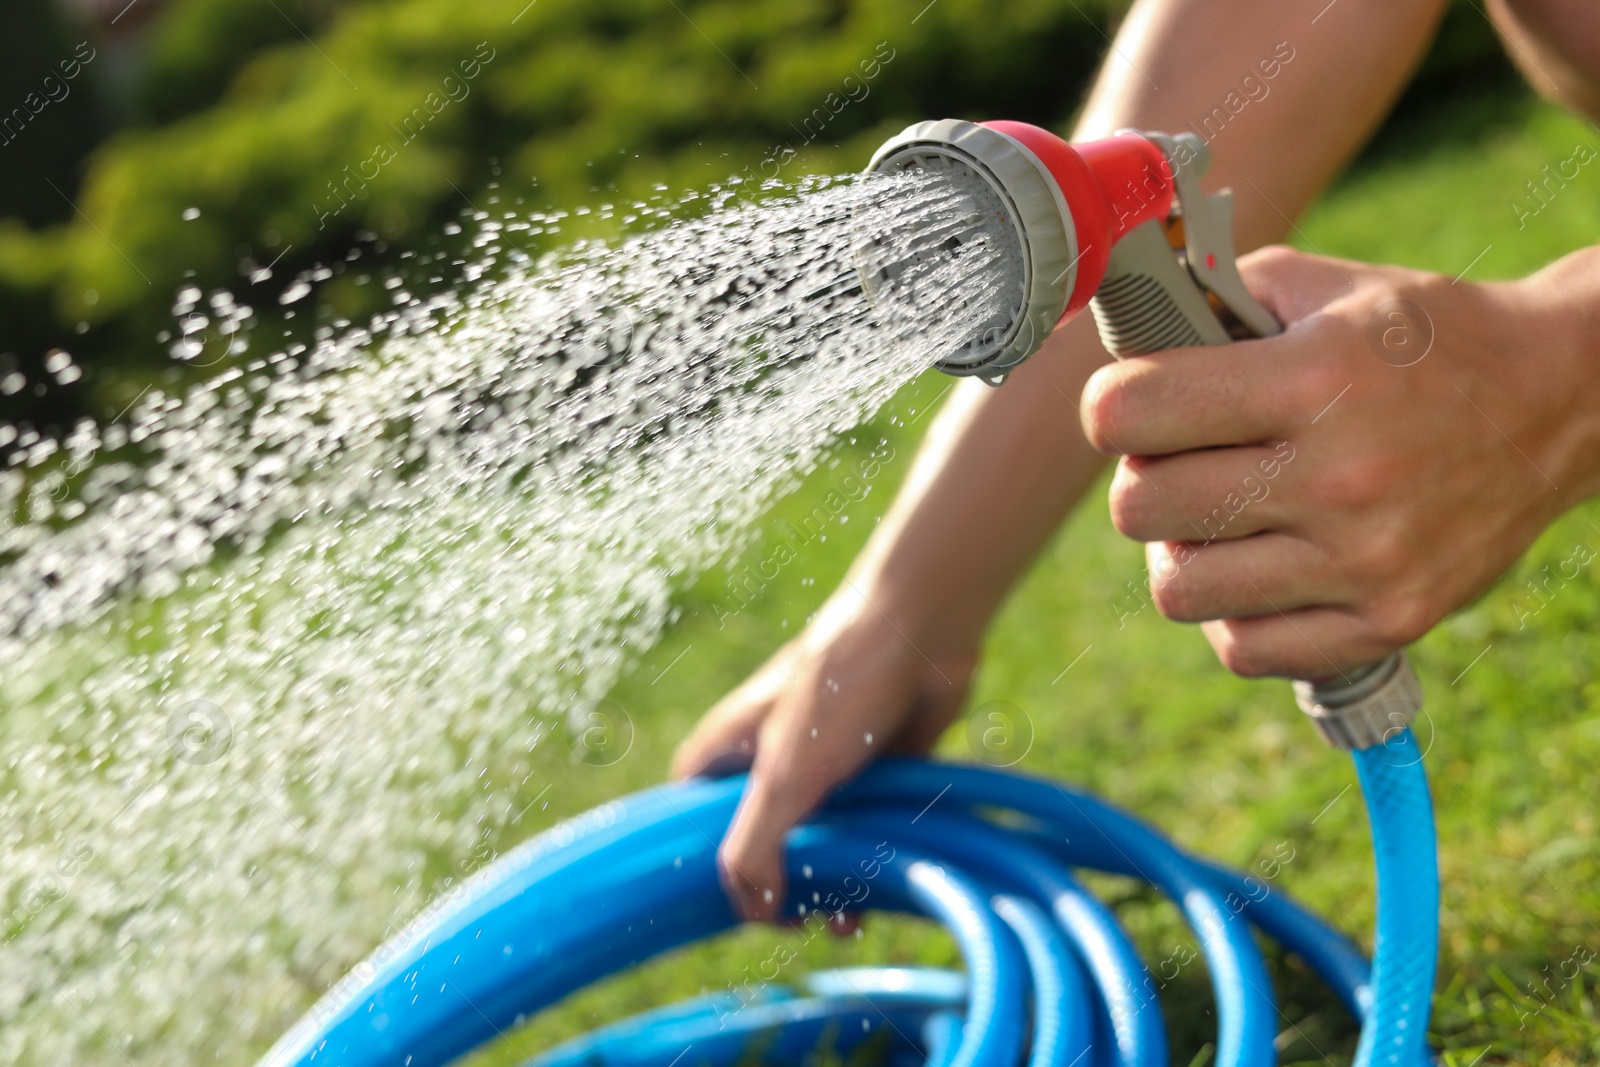 Photo of Man spraying water from hose in garden, closeup